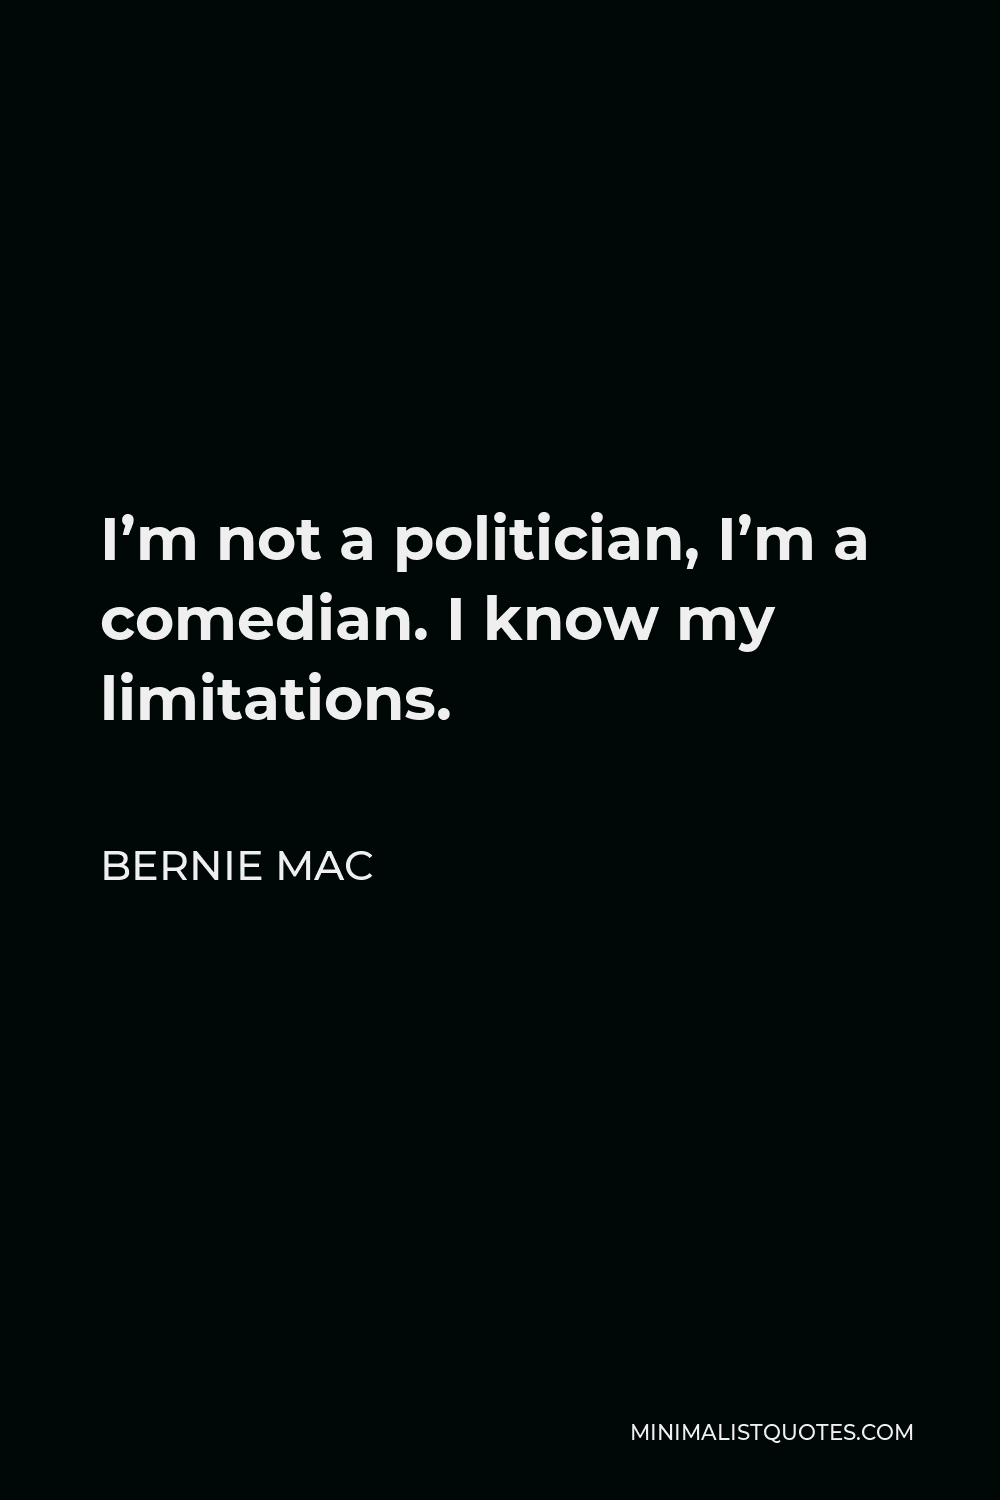 Bernie Mac Quote - I’m not a politician, I’m a comedian. I know my limitations.